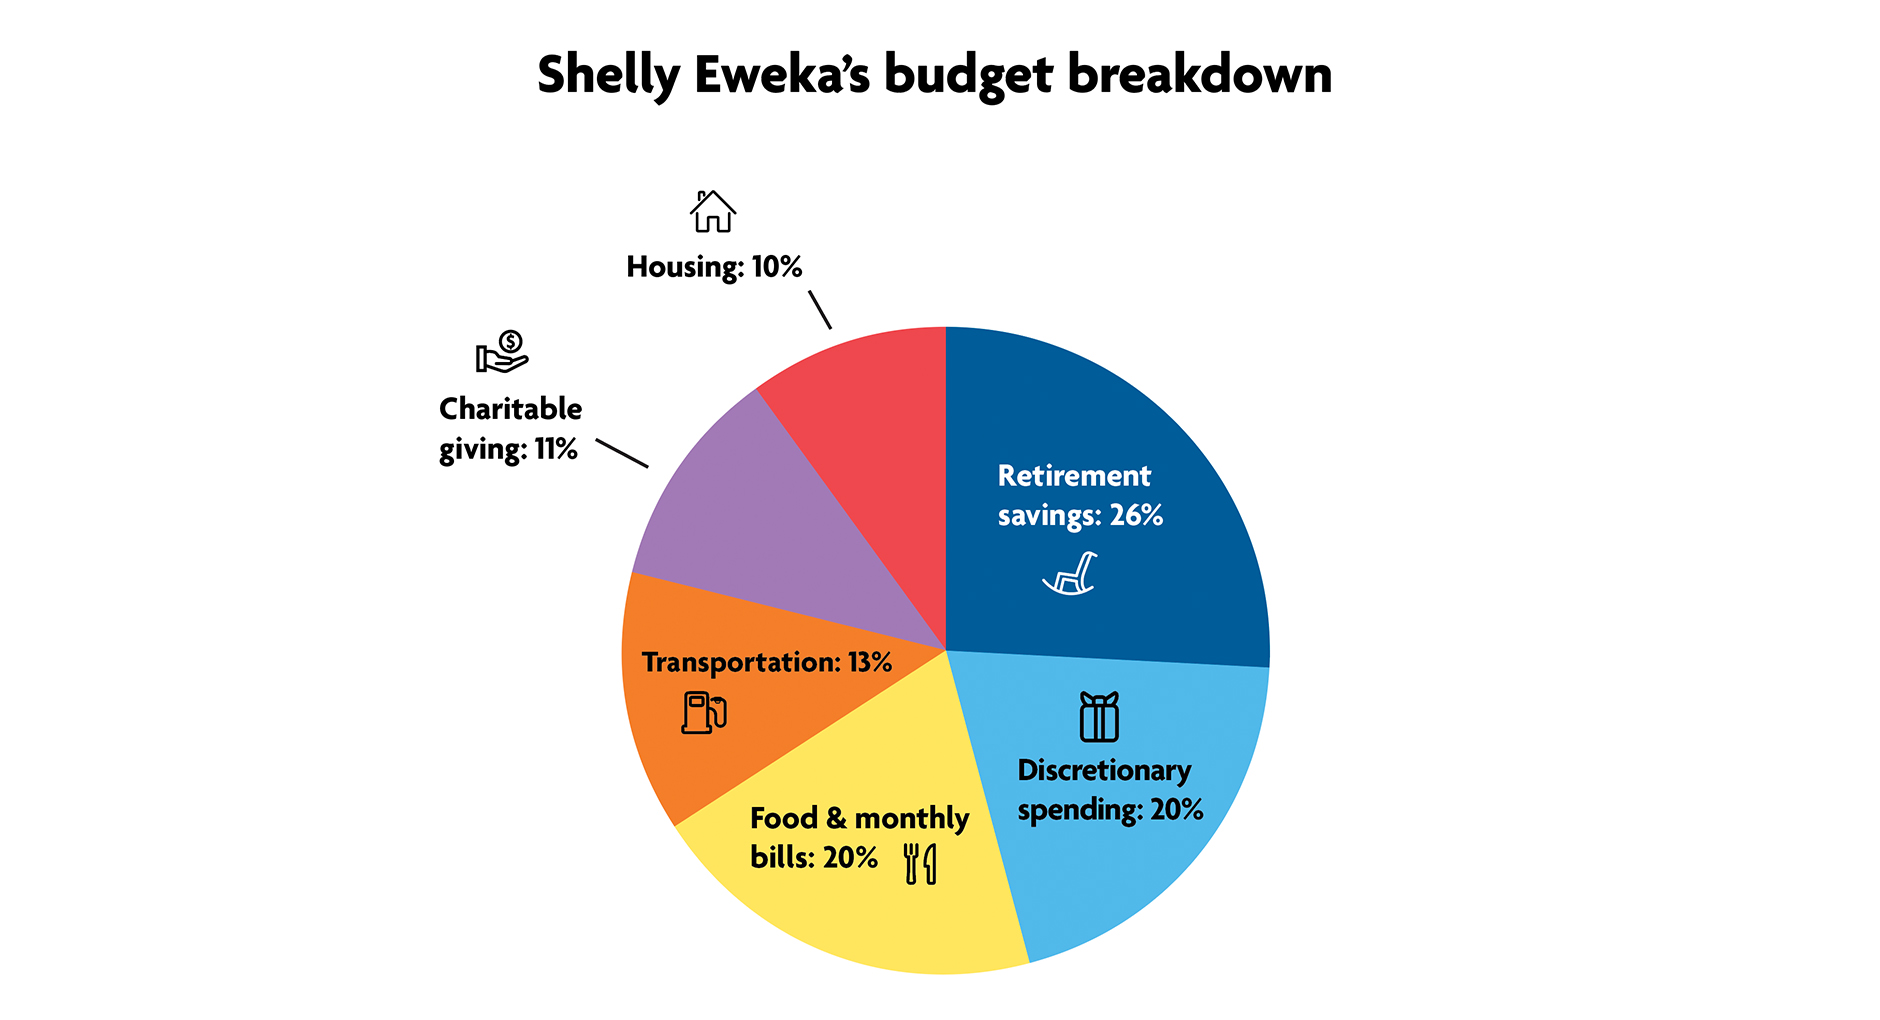 Shelly Eweka's budget breakdown piechart: Retirement savings 26%, Housing 10%, Discretionary 20%, Food and bills 20%, Charitable giving 11%, Transportation 13%